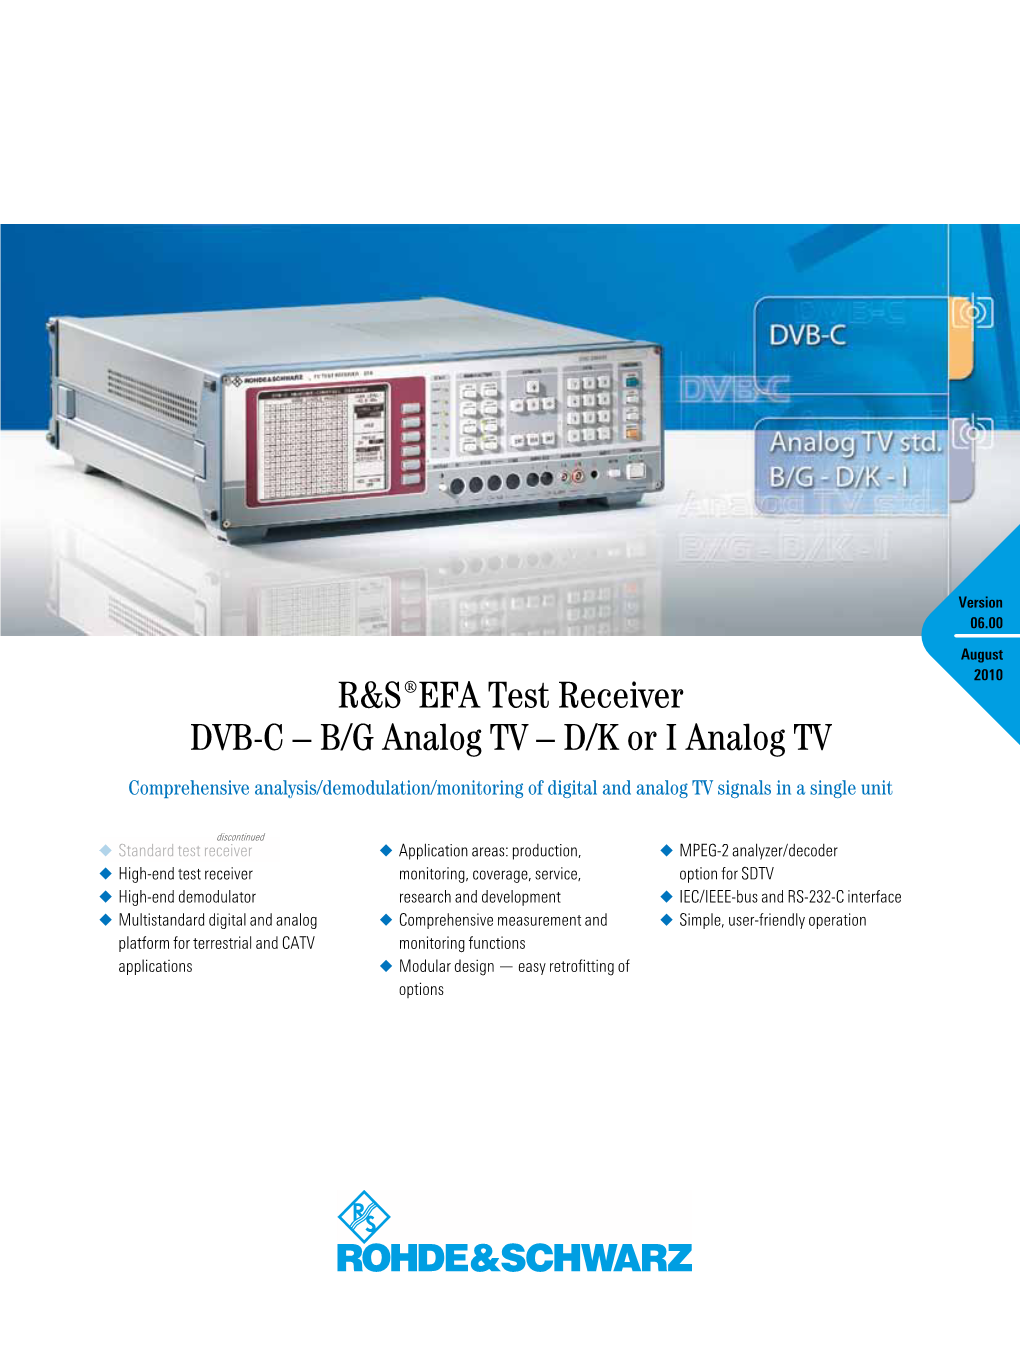 R&S EFA Test Receiver DVB-C – B/G Analog TV